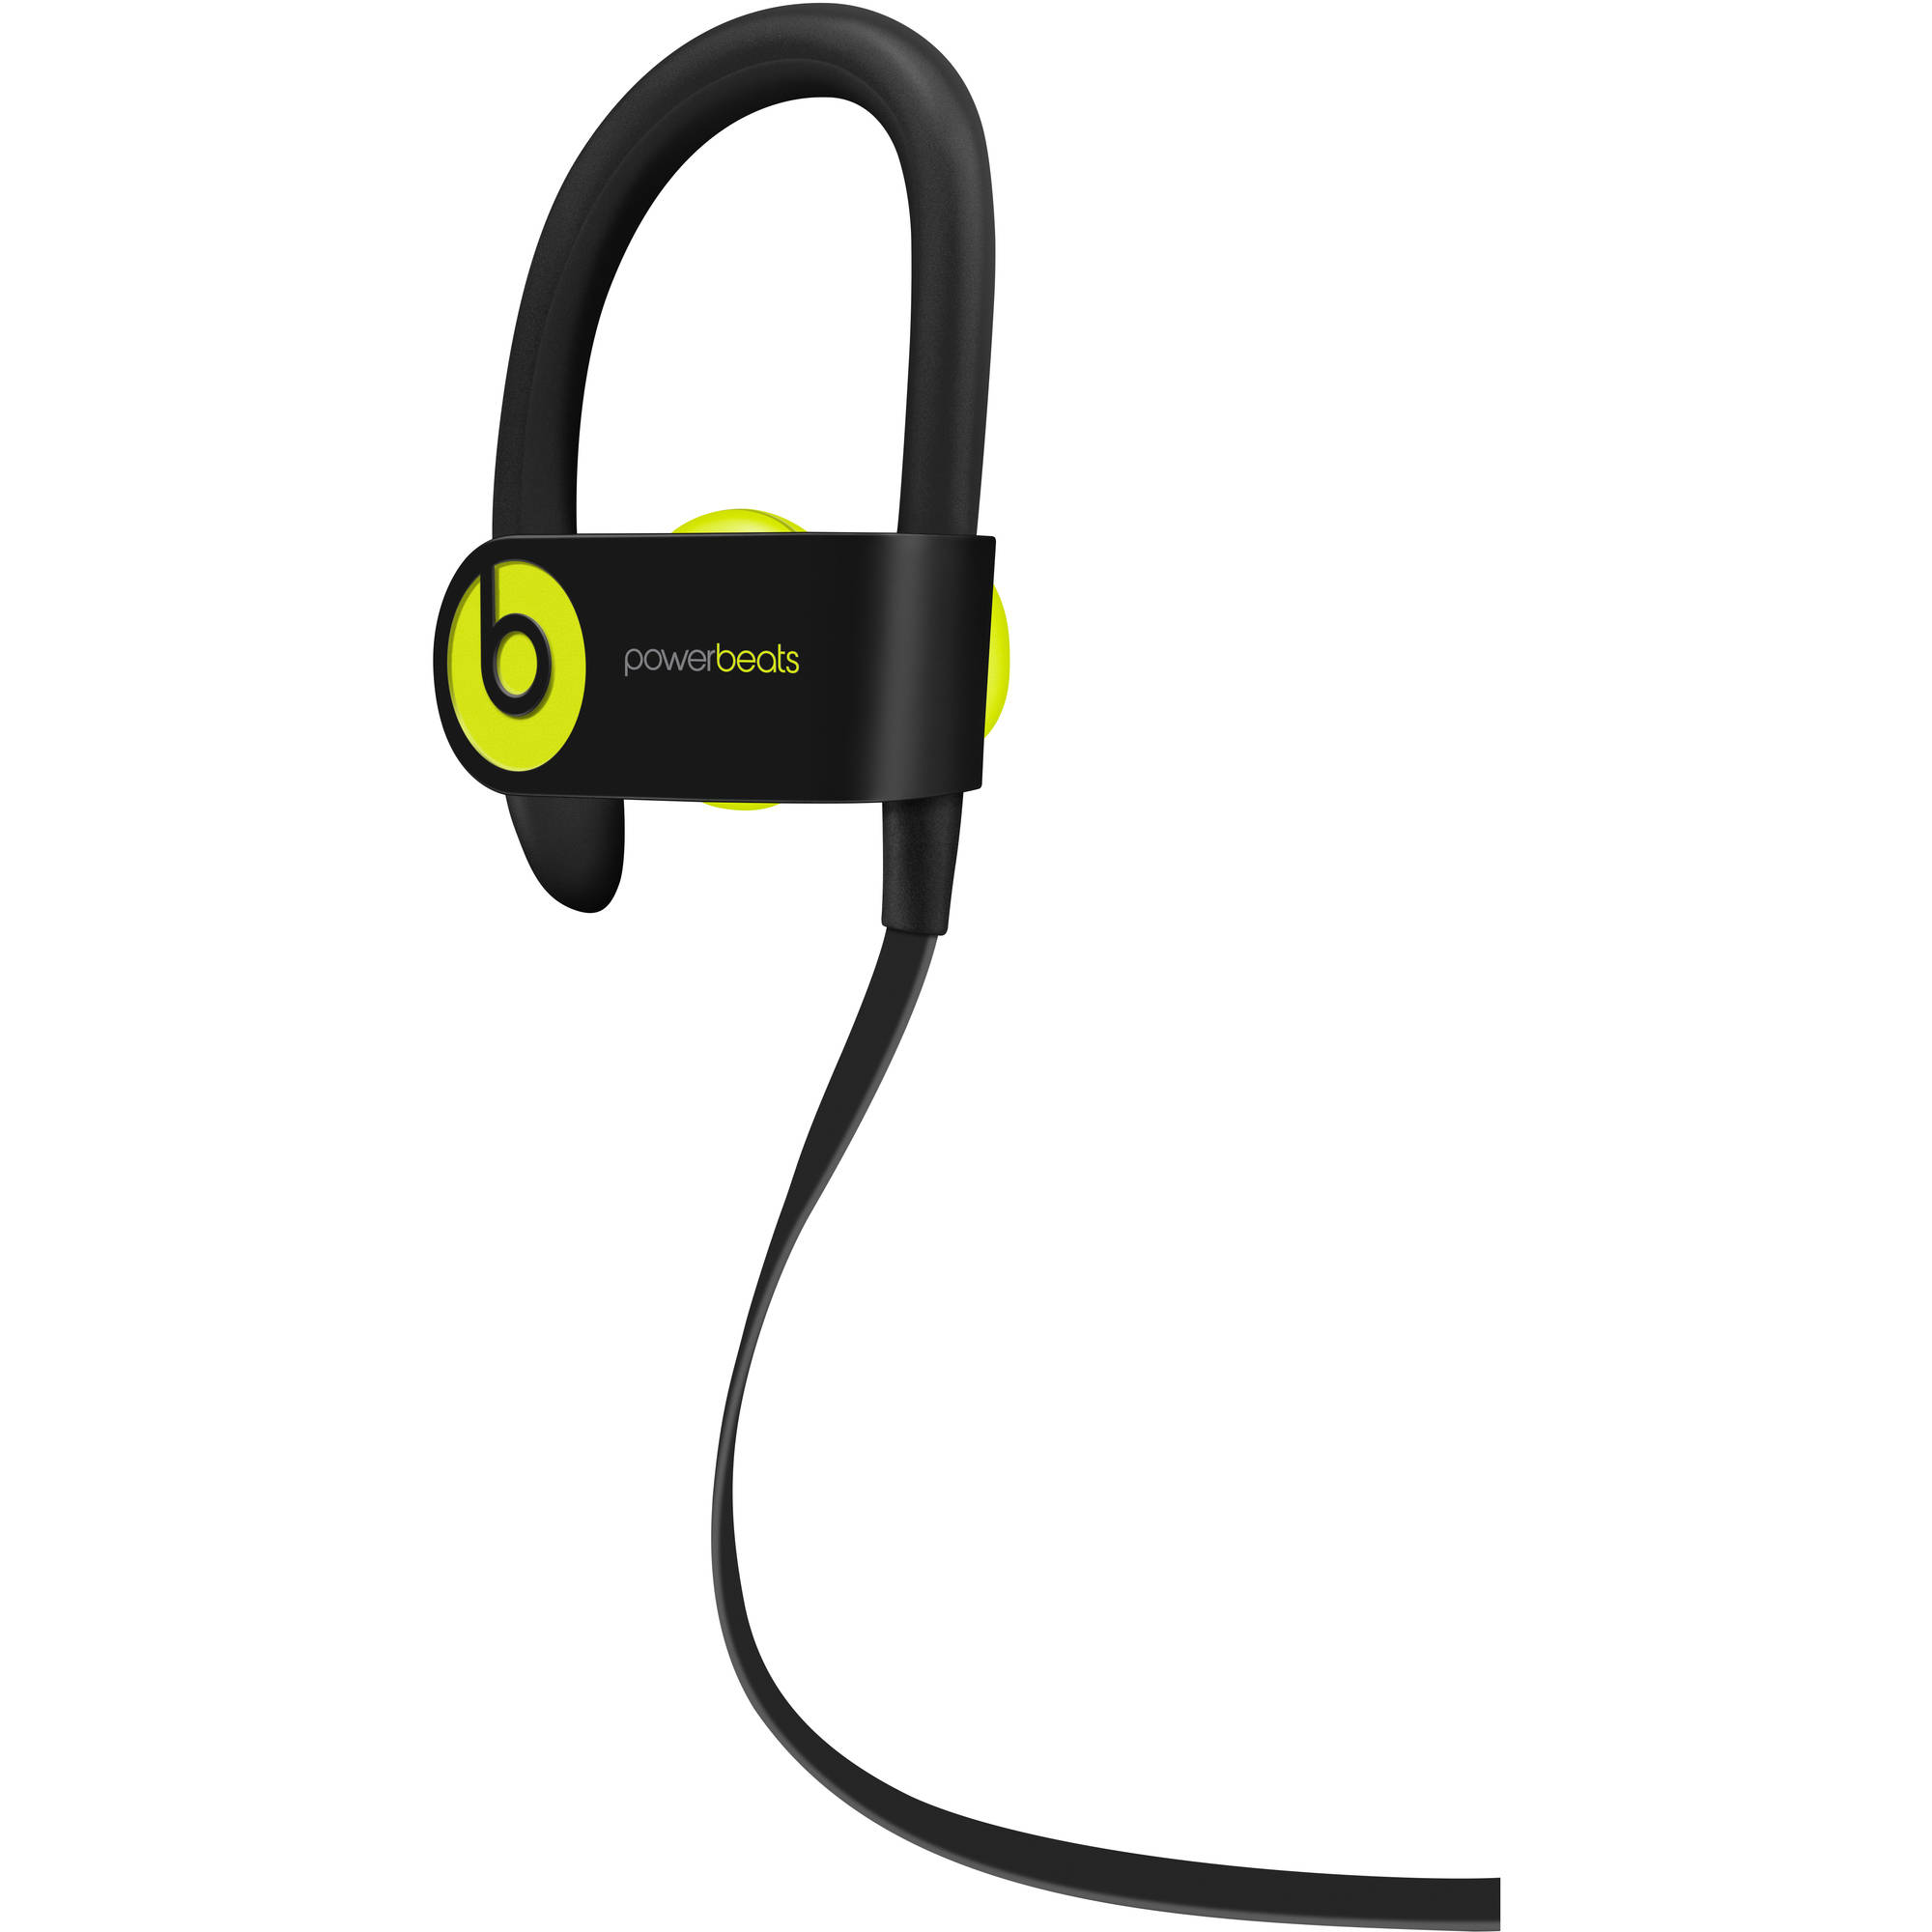 Used Apple Beats Powerbeats3 Wireless Shock Yellow In Ear Headphones MNN02LL/A - image 5 of 6